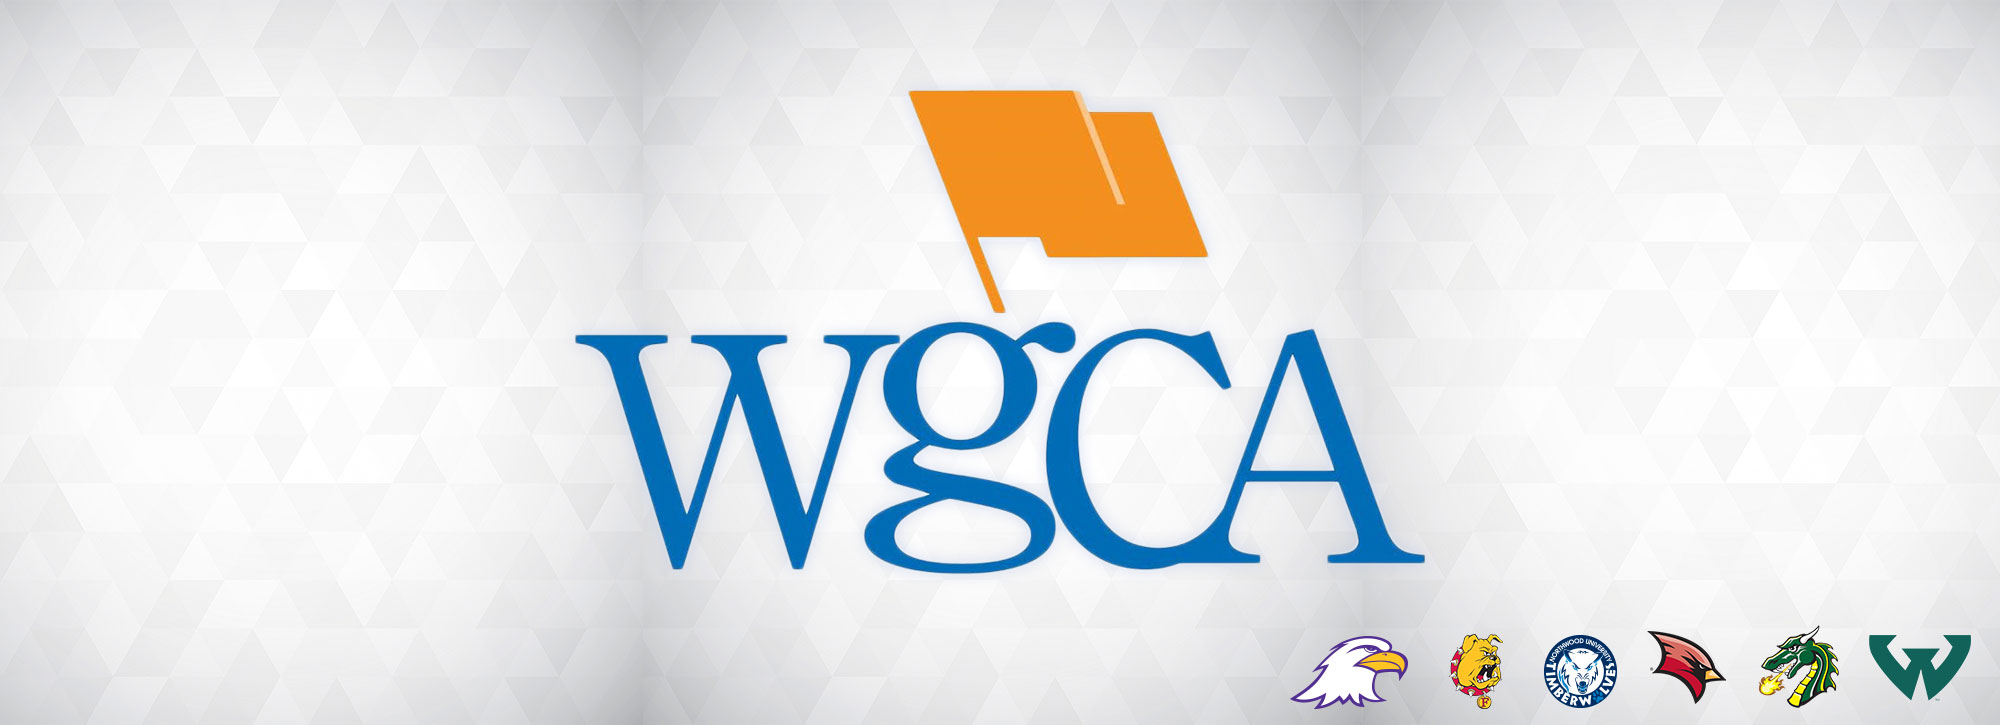 GLIAC Honors 18 WGCA All-America Scholar Recipients